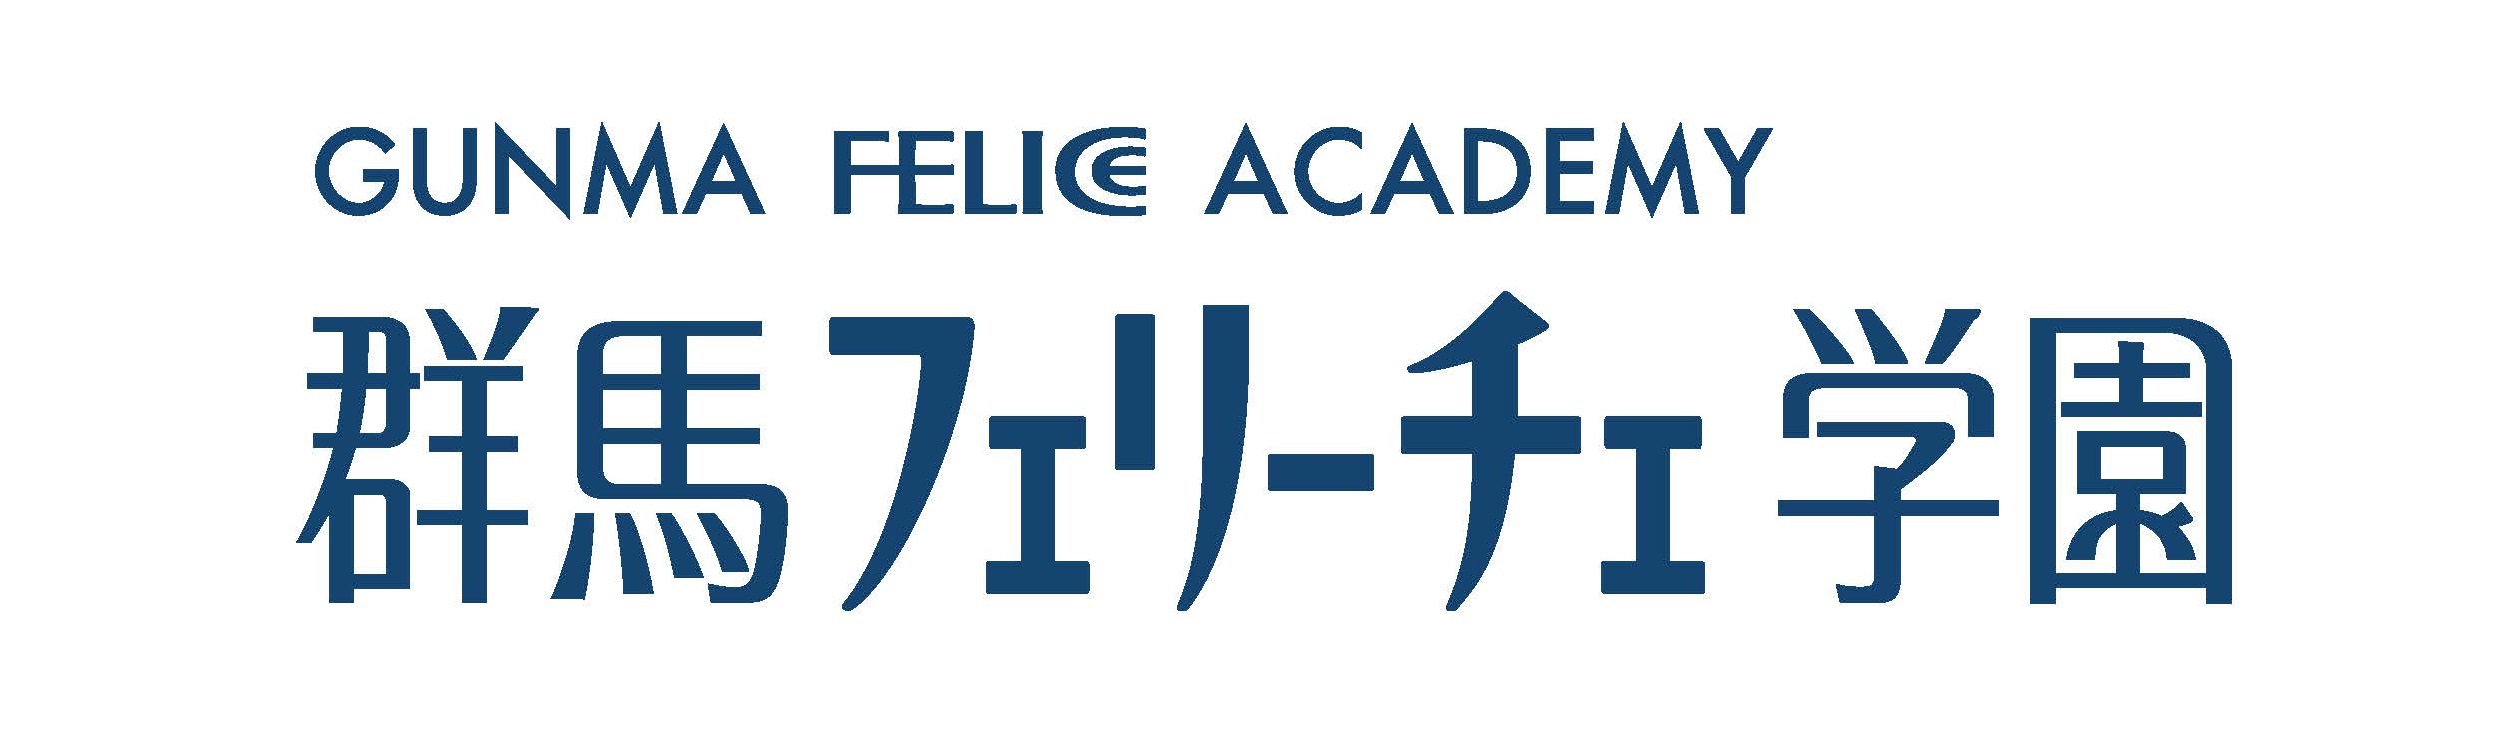 Gunma Felice Academy - banner